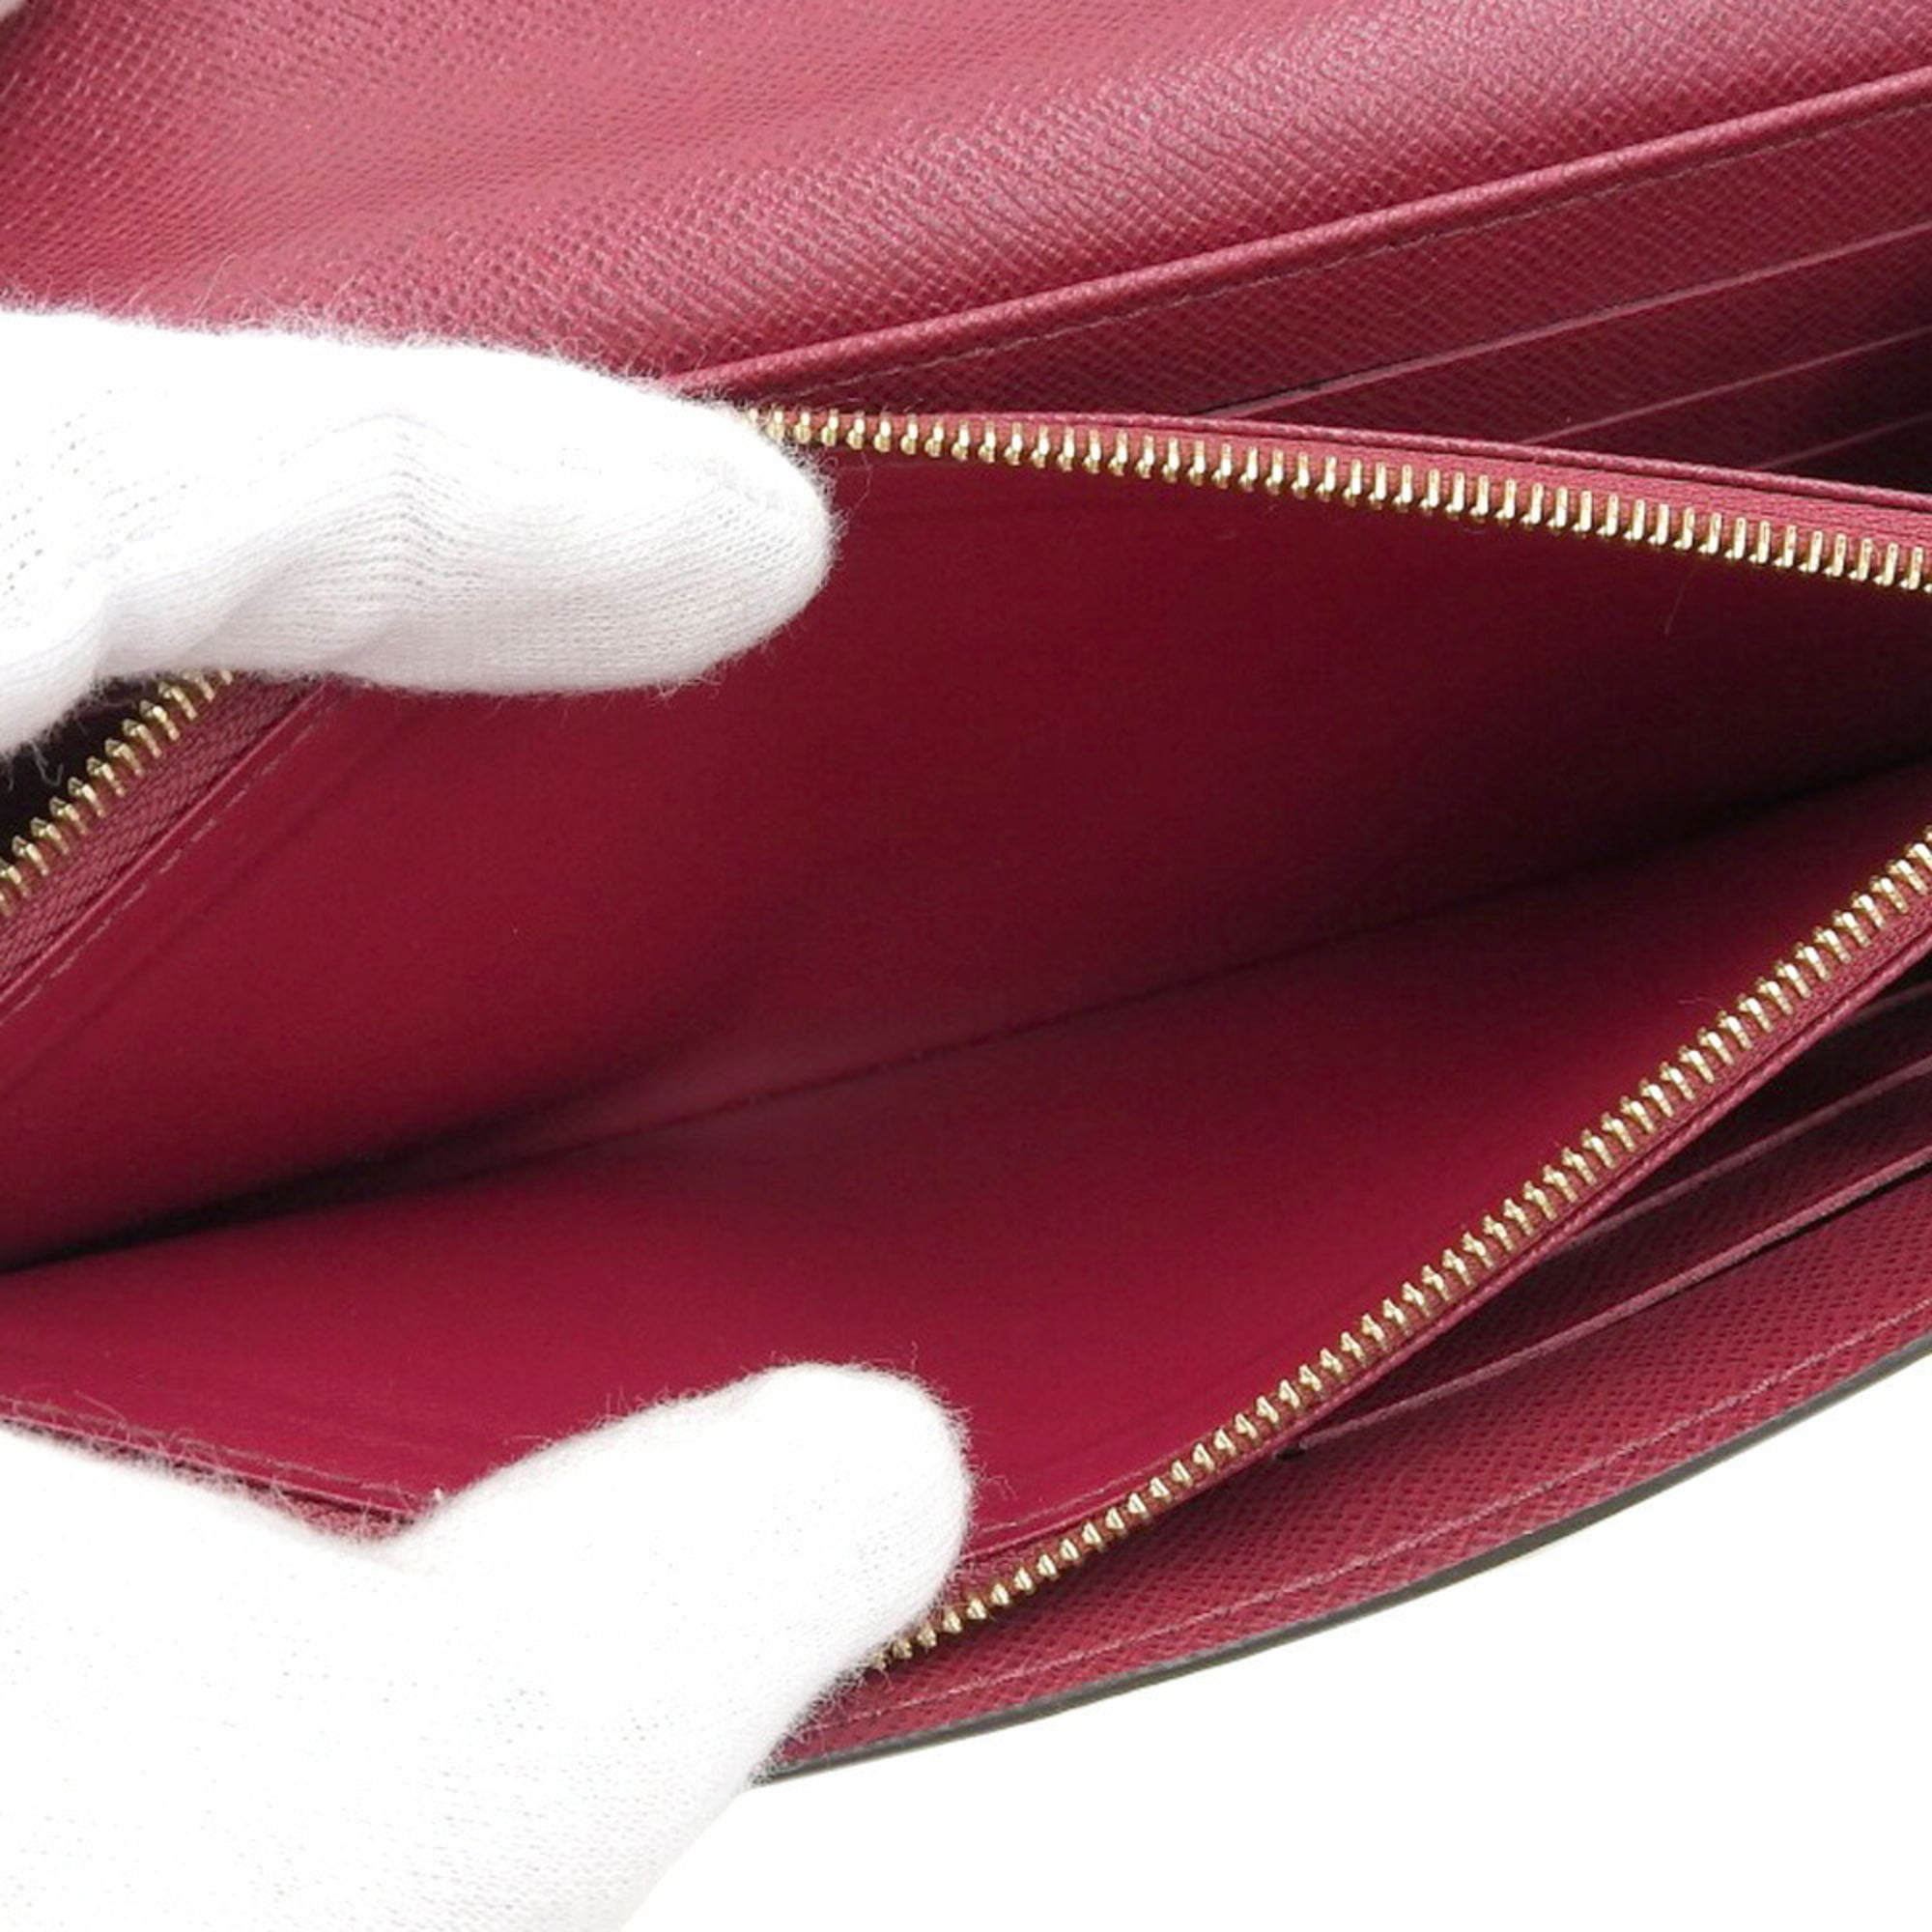 LOUIS VUITTON Vernis Portefeiulle Sarah Chain Long Wallet Red M90206 A